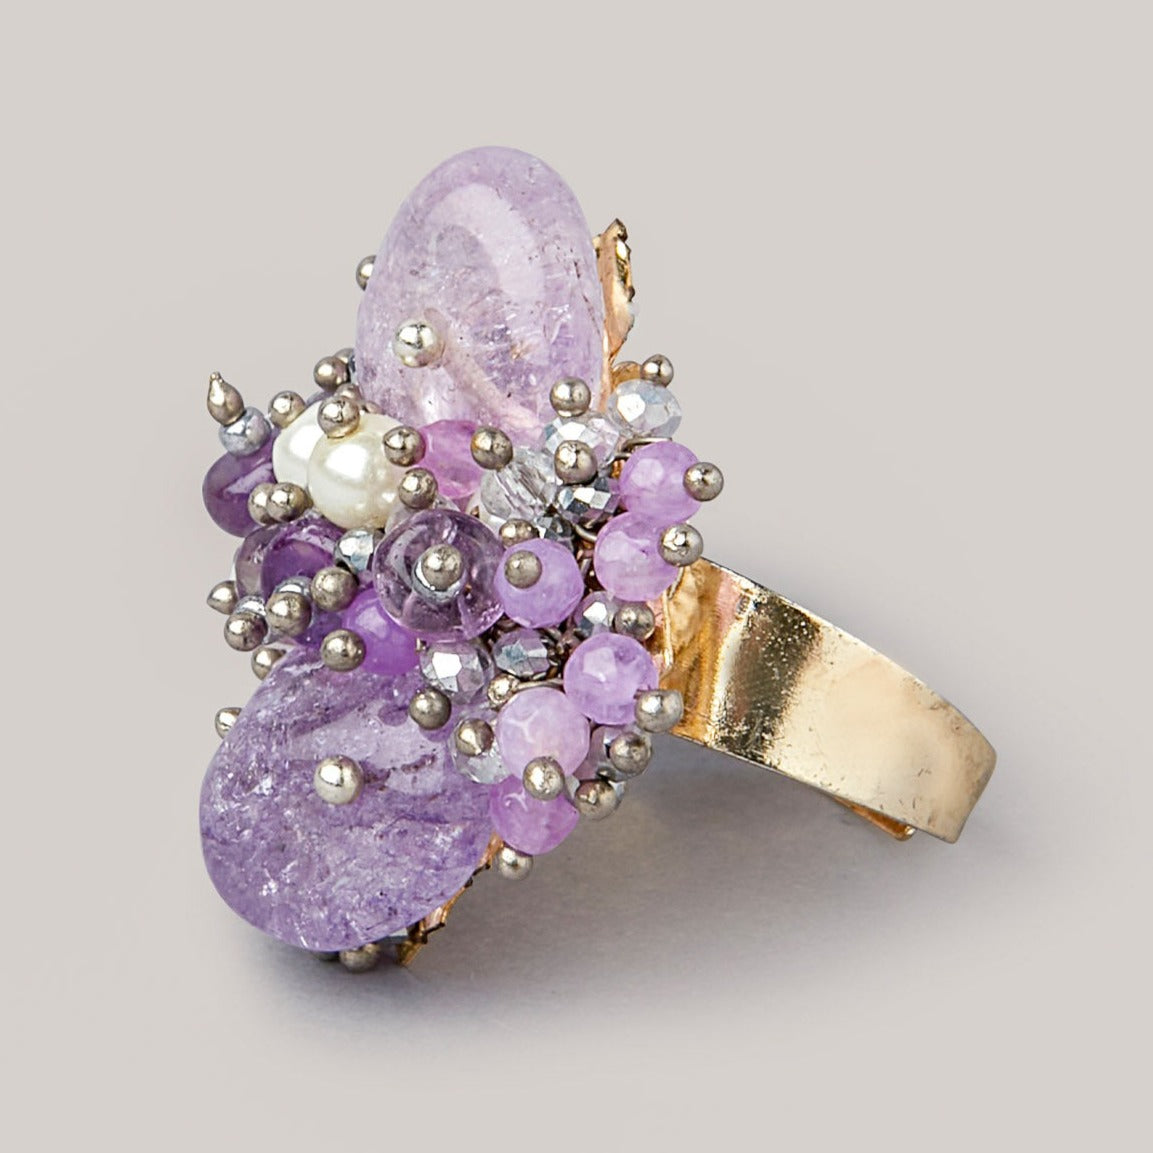 DORO - Handmade Statement Bracelet With Purple Stones And Pearls - Meraki Lifestyle Store